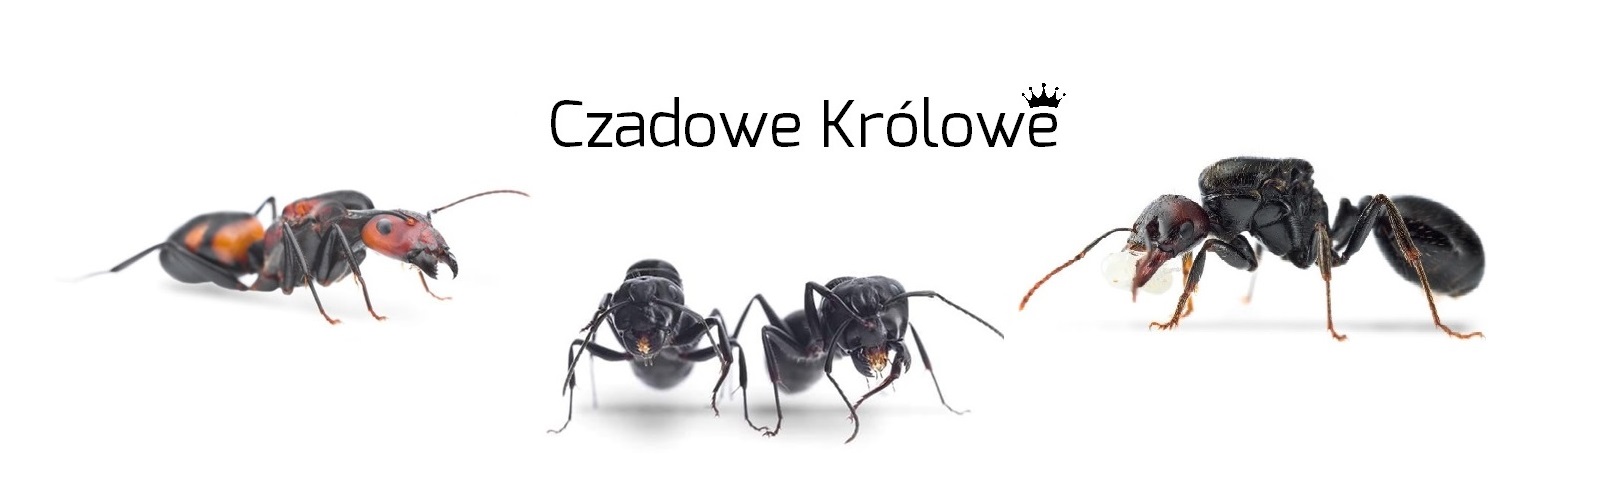 mrowki-krolowe-ant3d-1600x600-jpg123